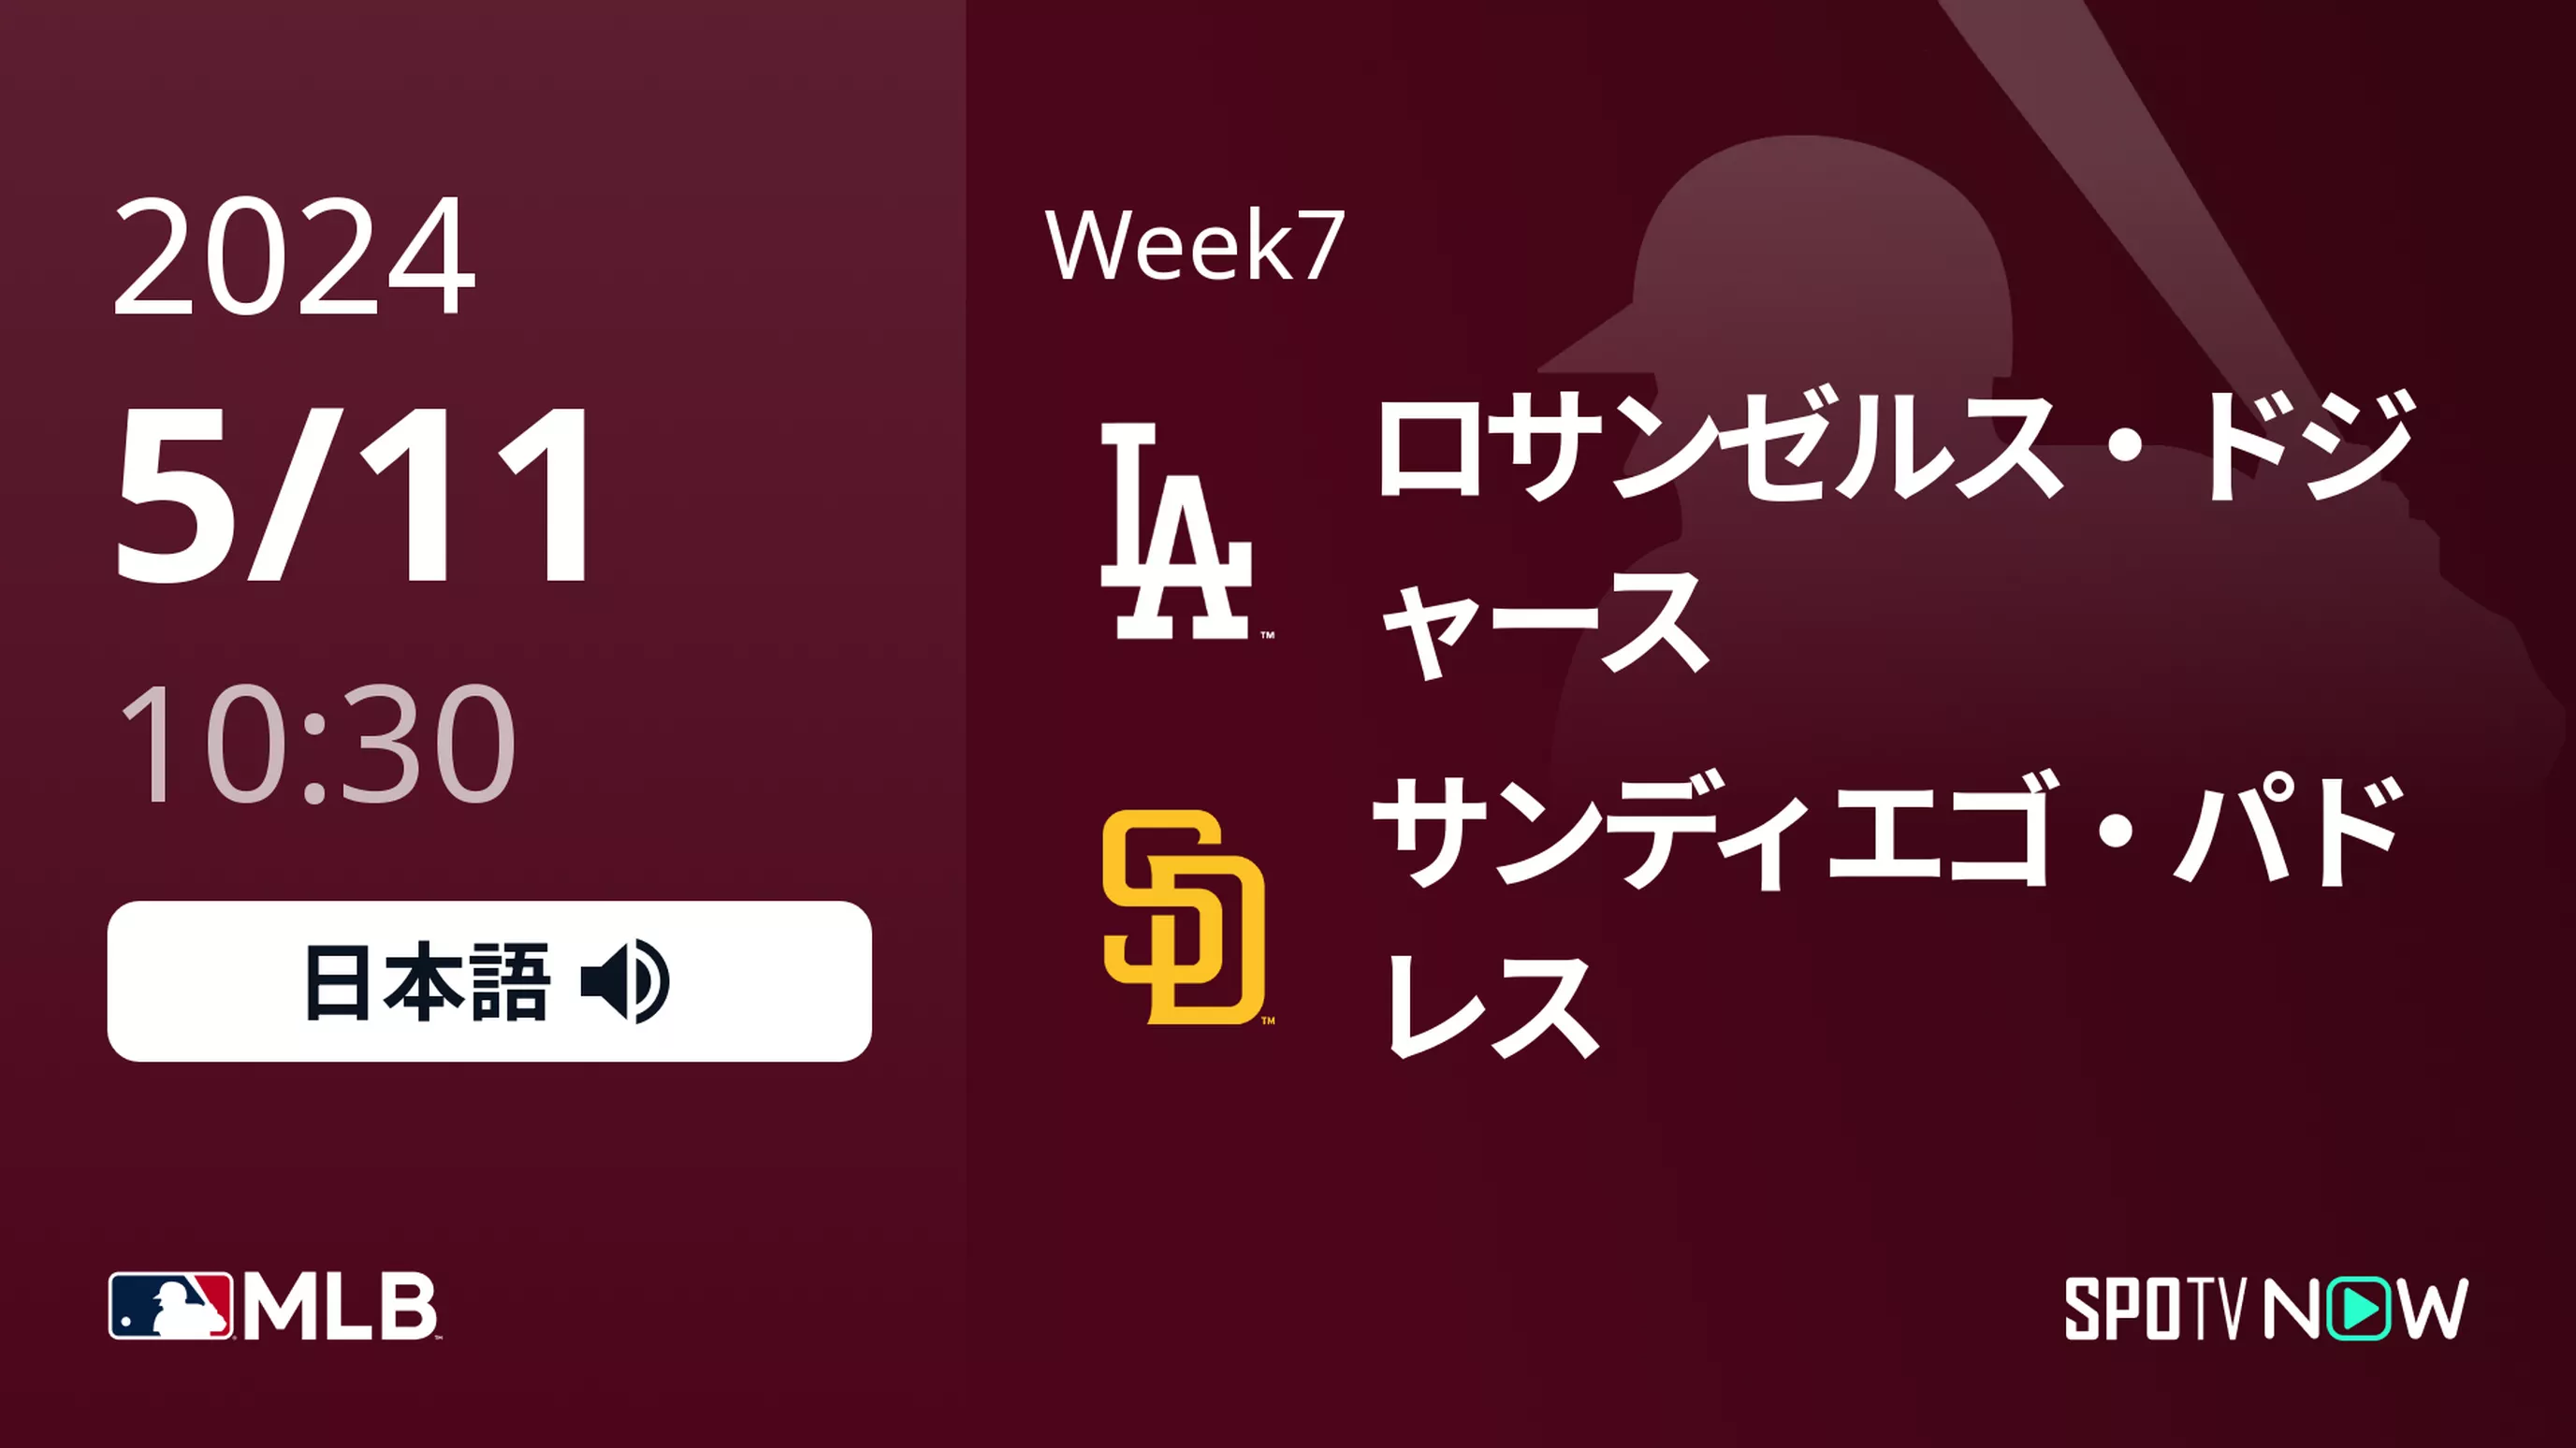 Week7 ドジャース vs パドレス 5/11[MLB]